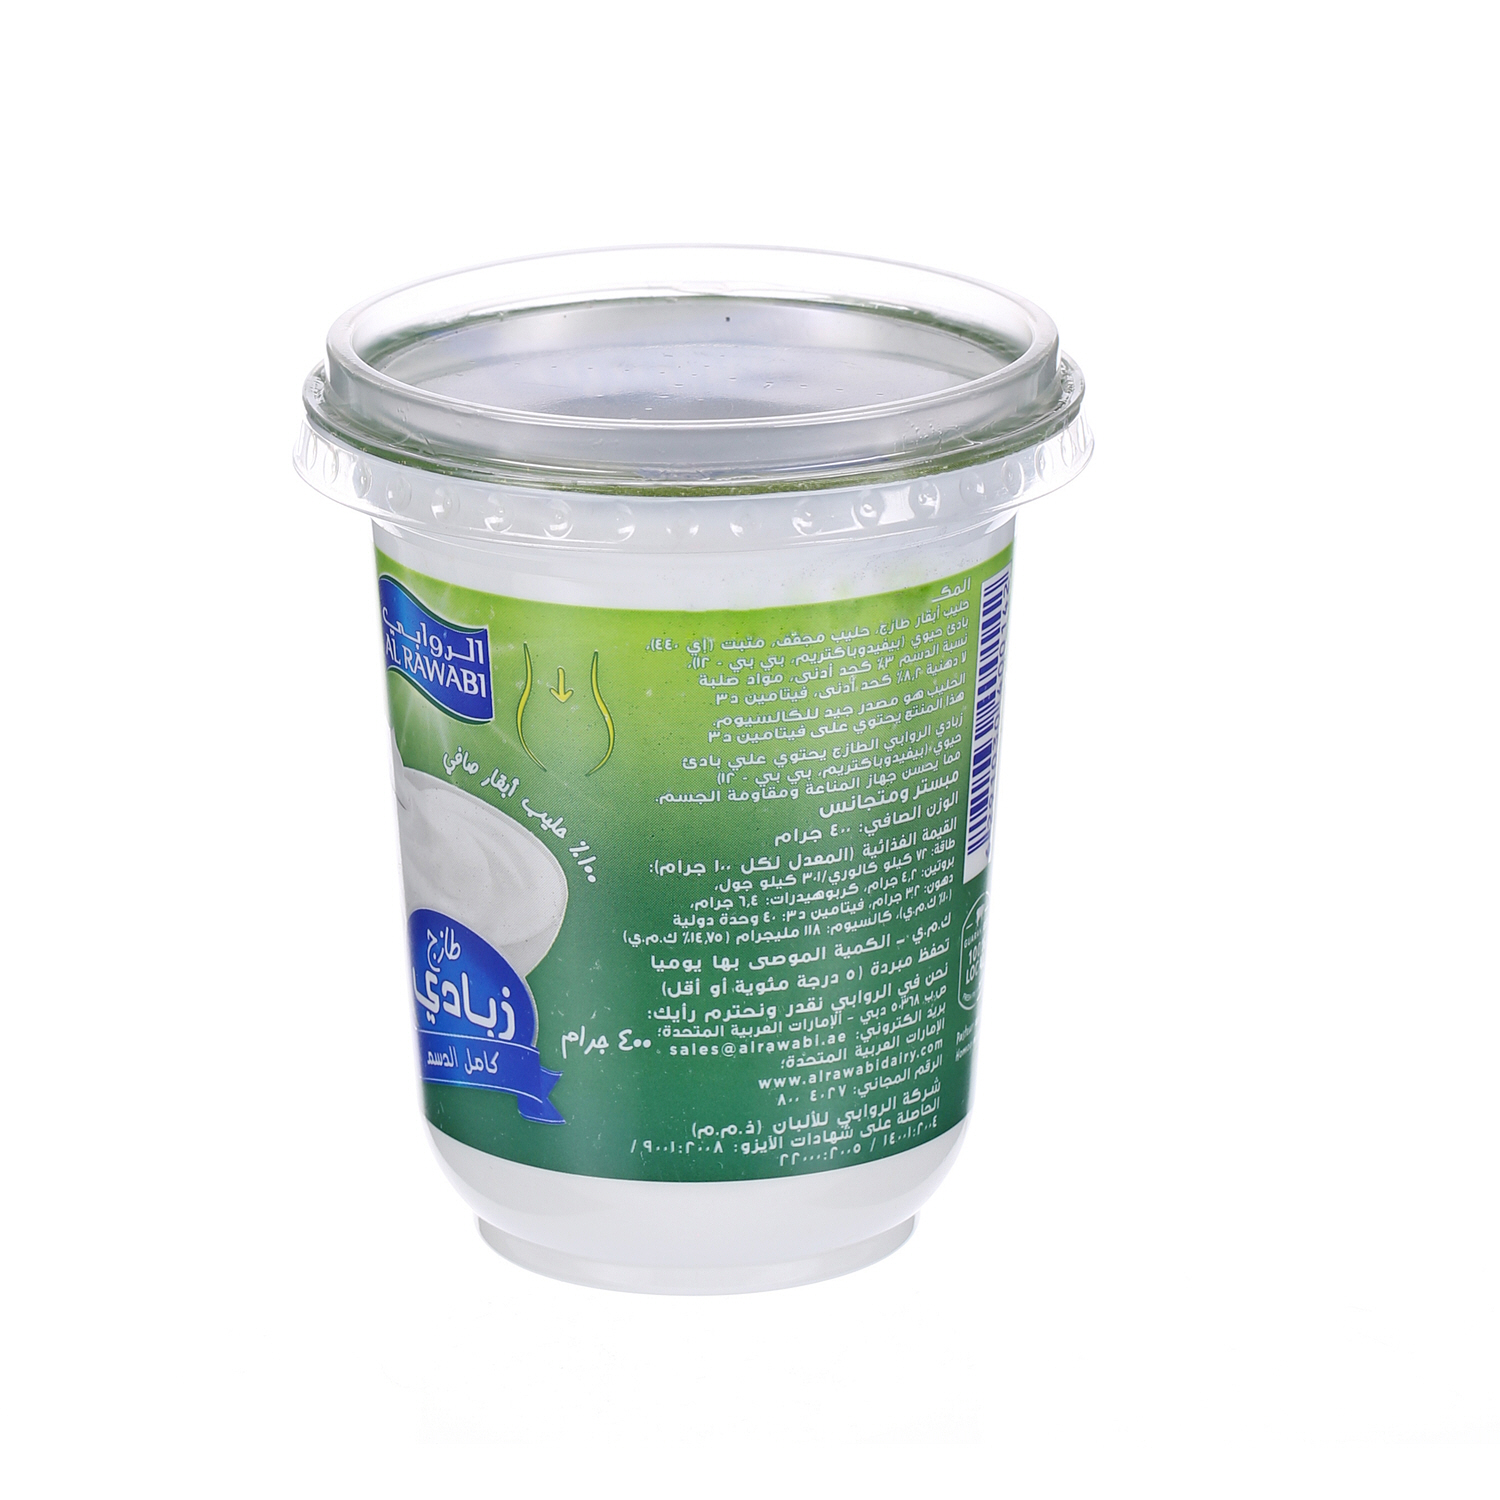 Al Rawabi Fresh Yoghurt Full Fat 400gm